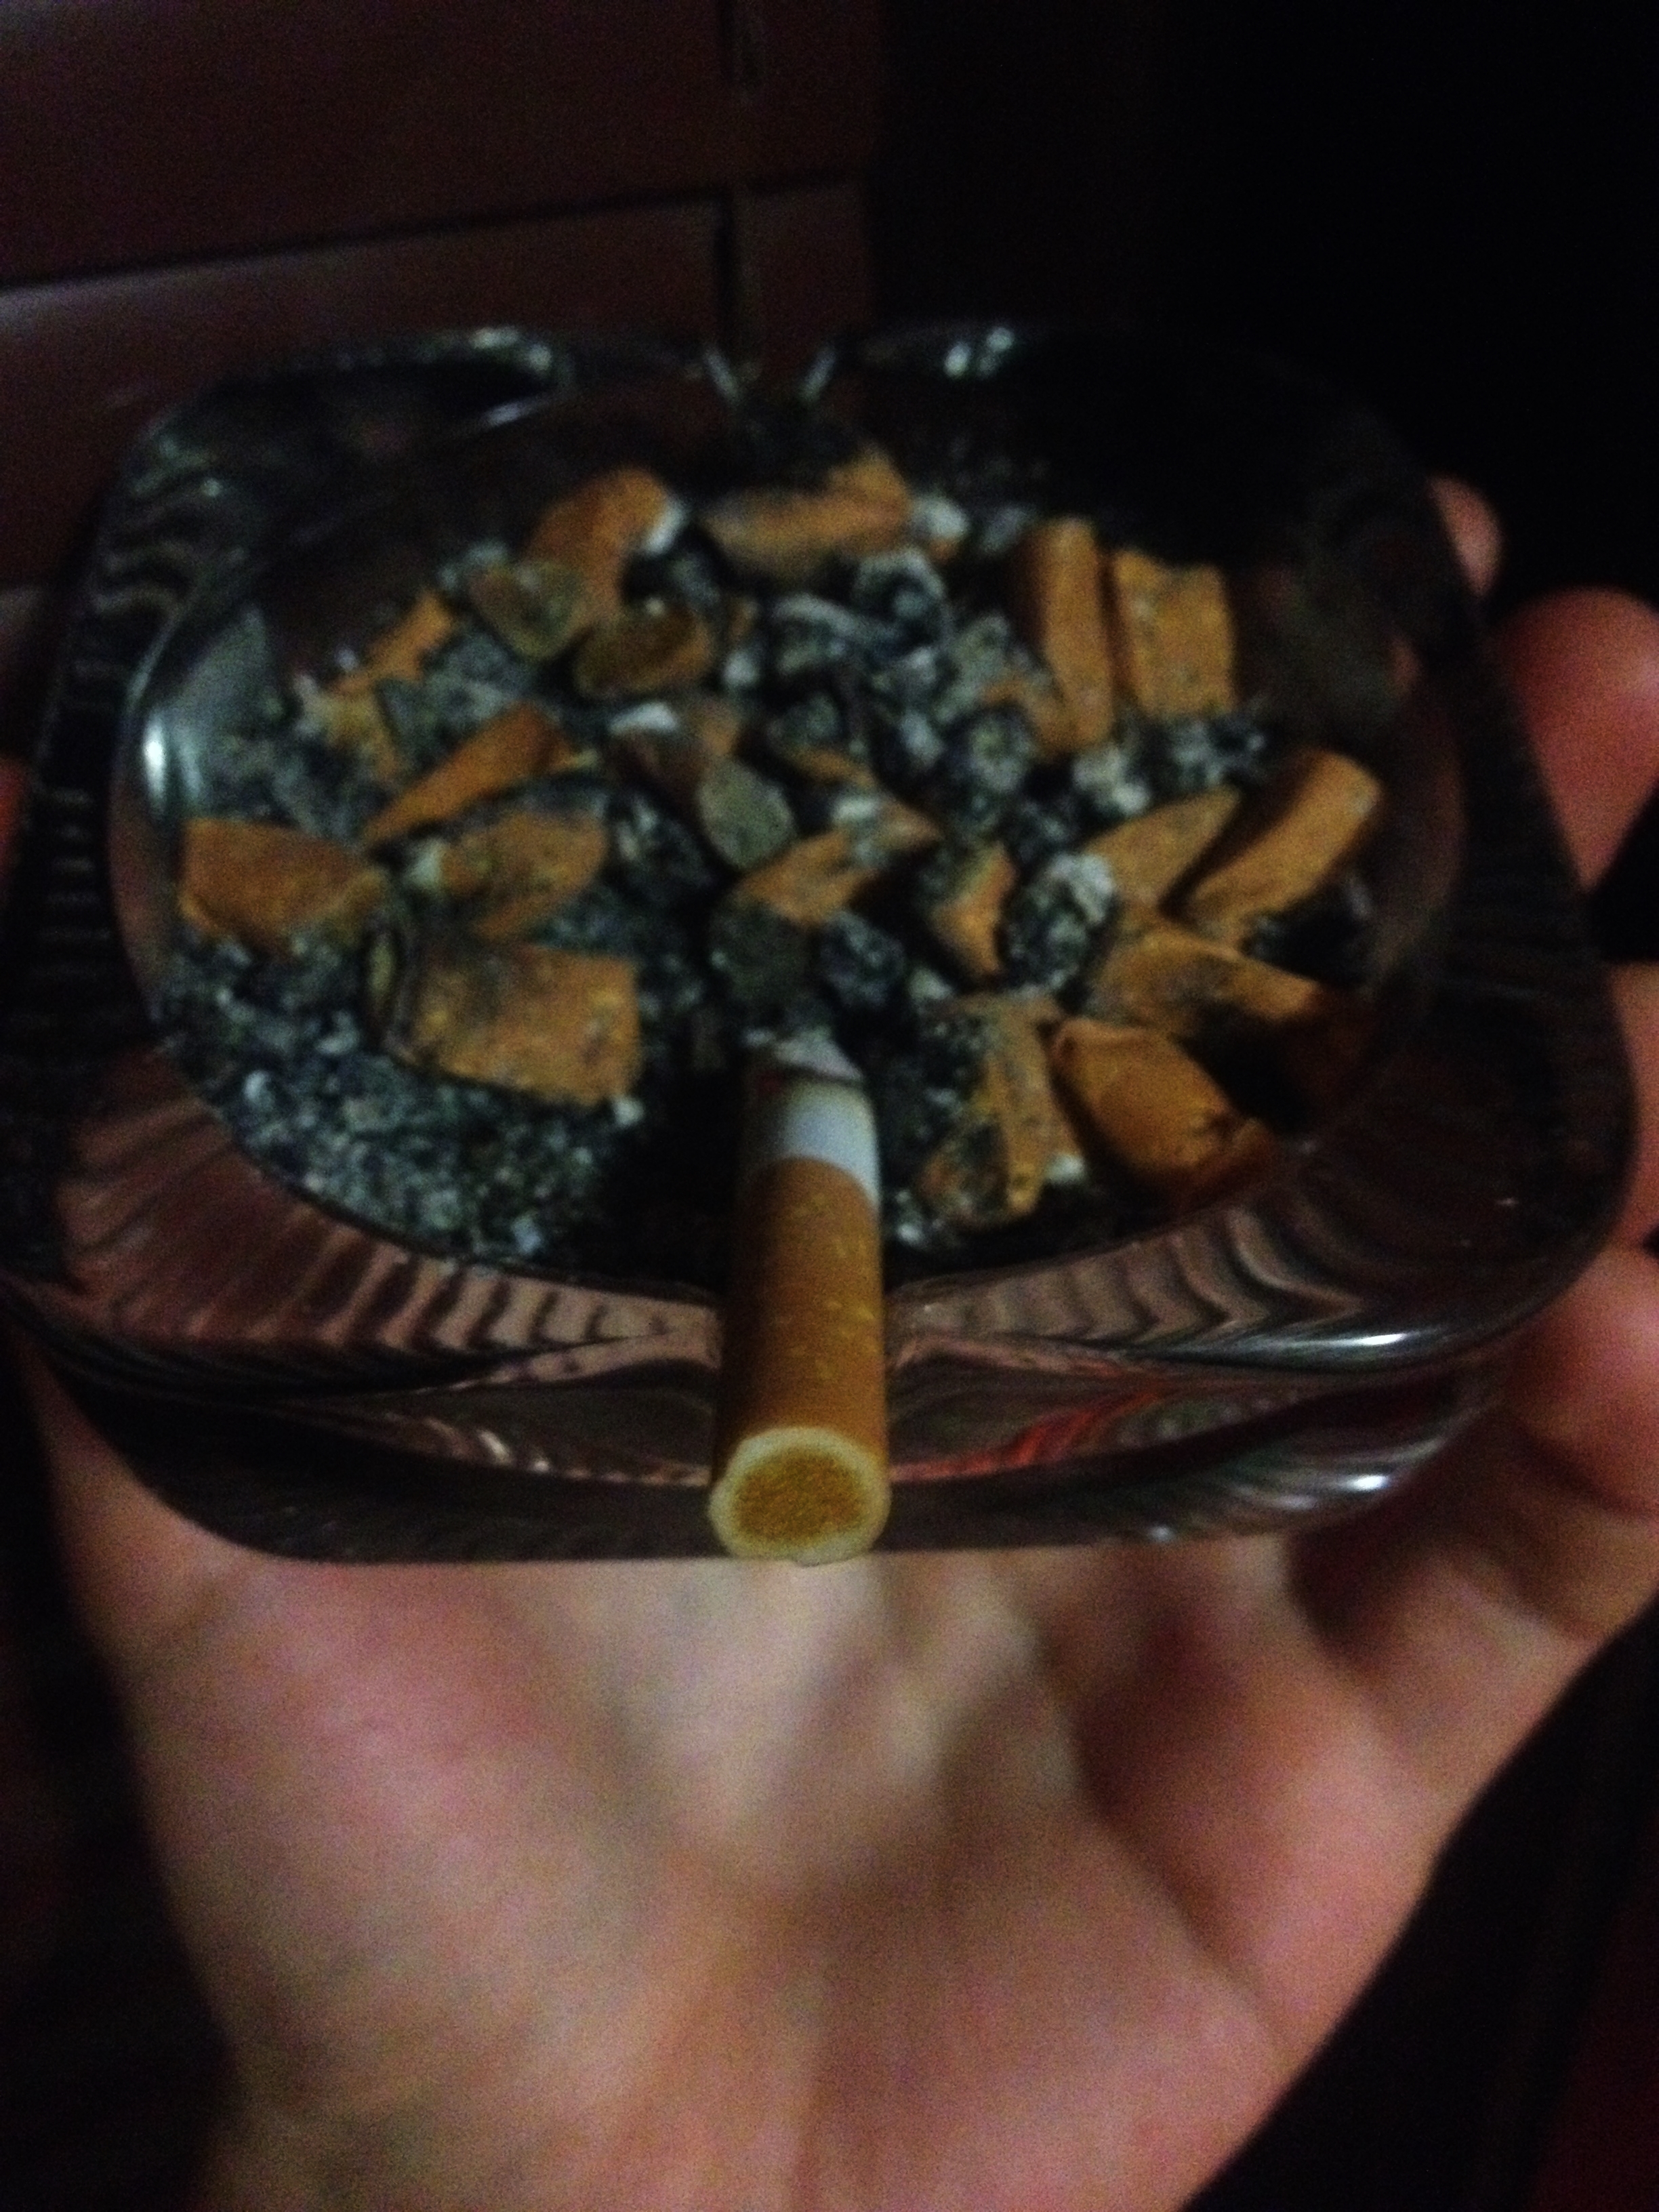 Smoking from the ashtray